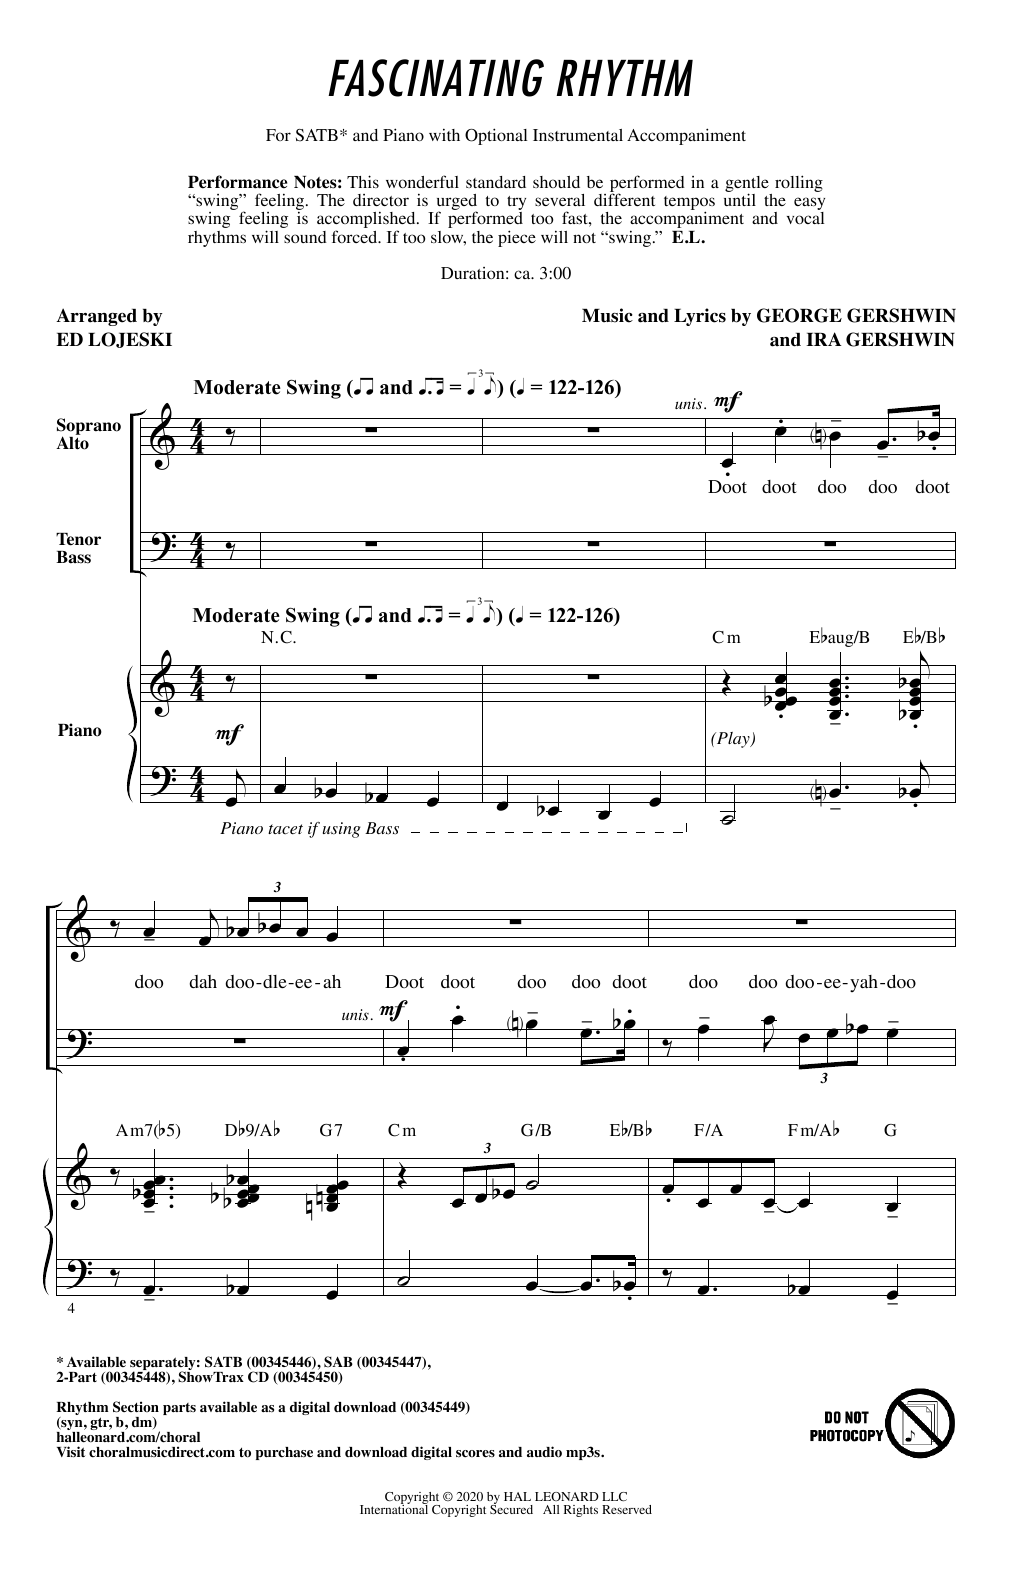 Download George Gershwin & Ira Gershwin Fascinating Rhythm (from Lady Be Good) Sheet Music